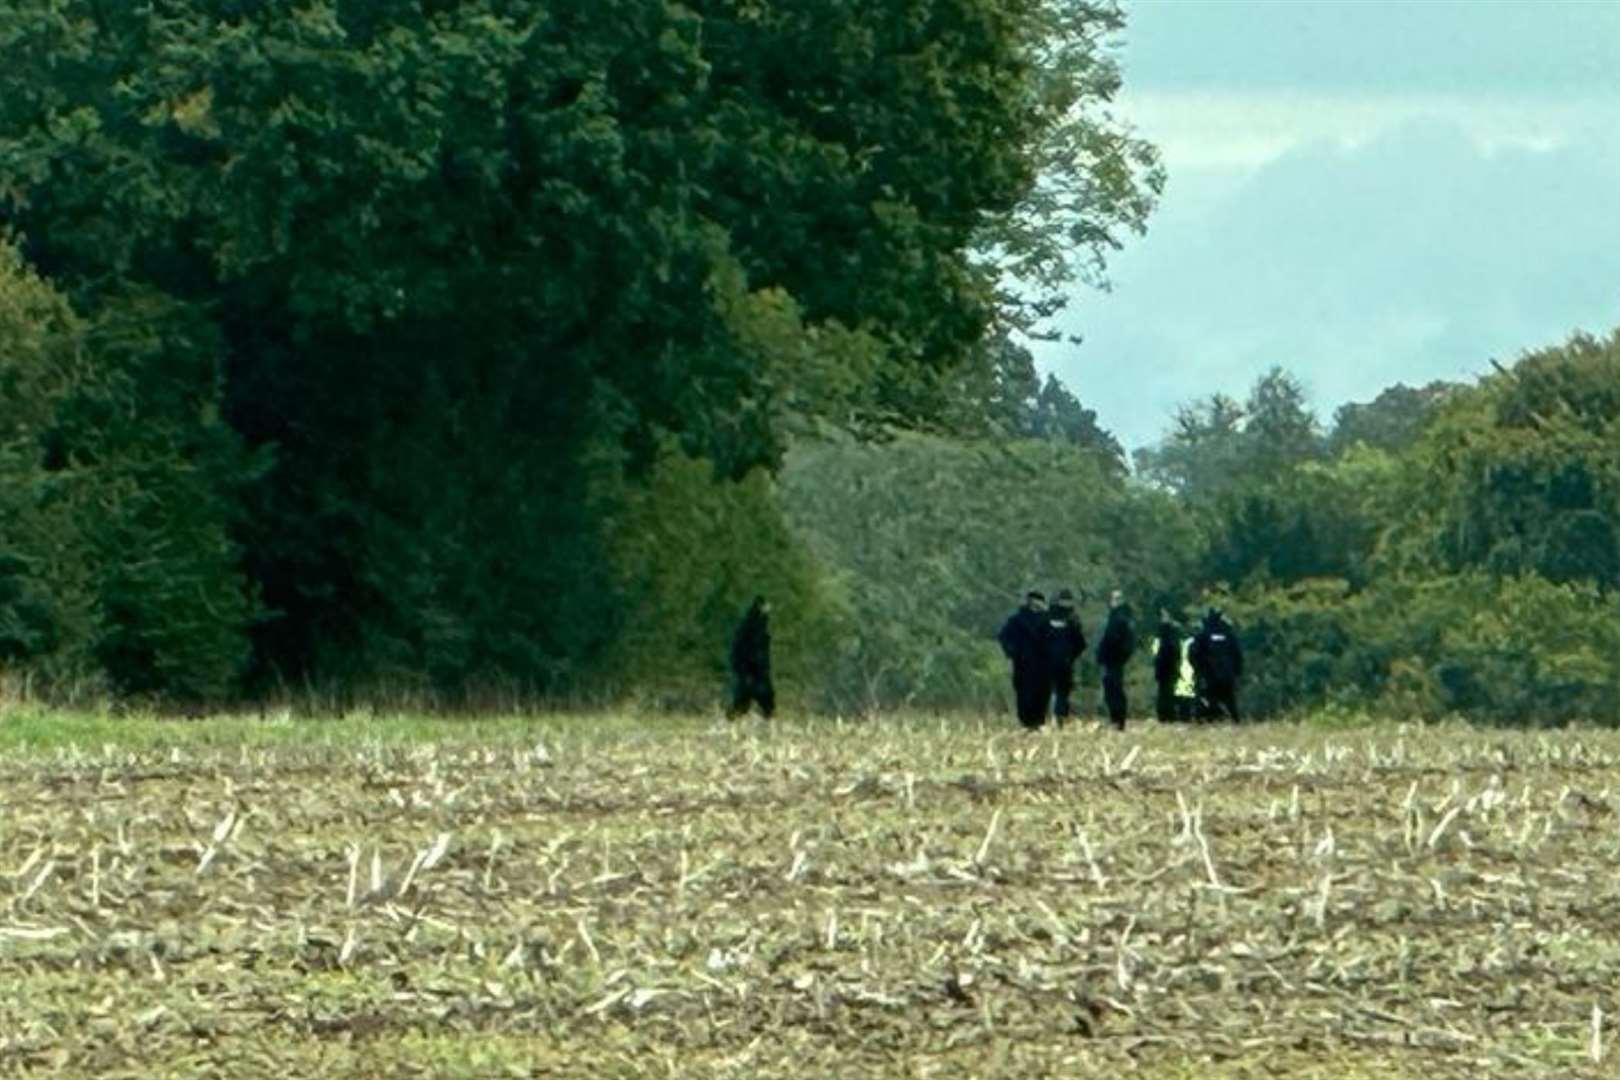 Search crews have been scouring fields in villages around Faversham. Picture: Brian Flynn